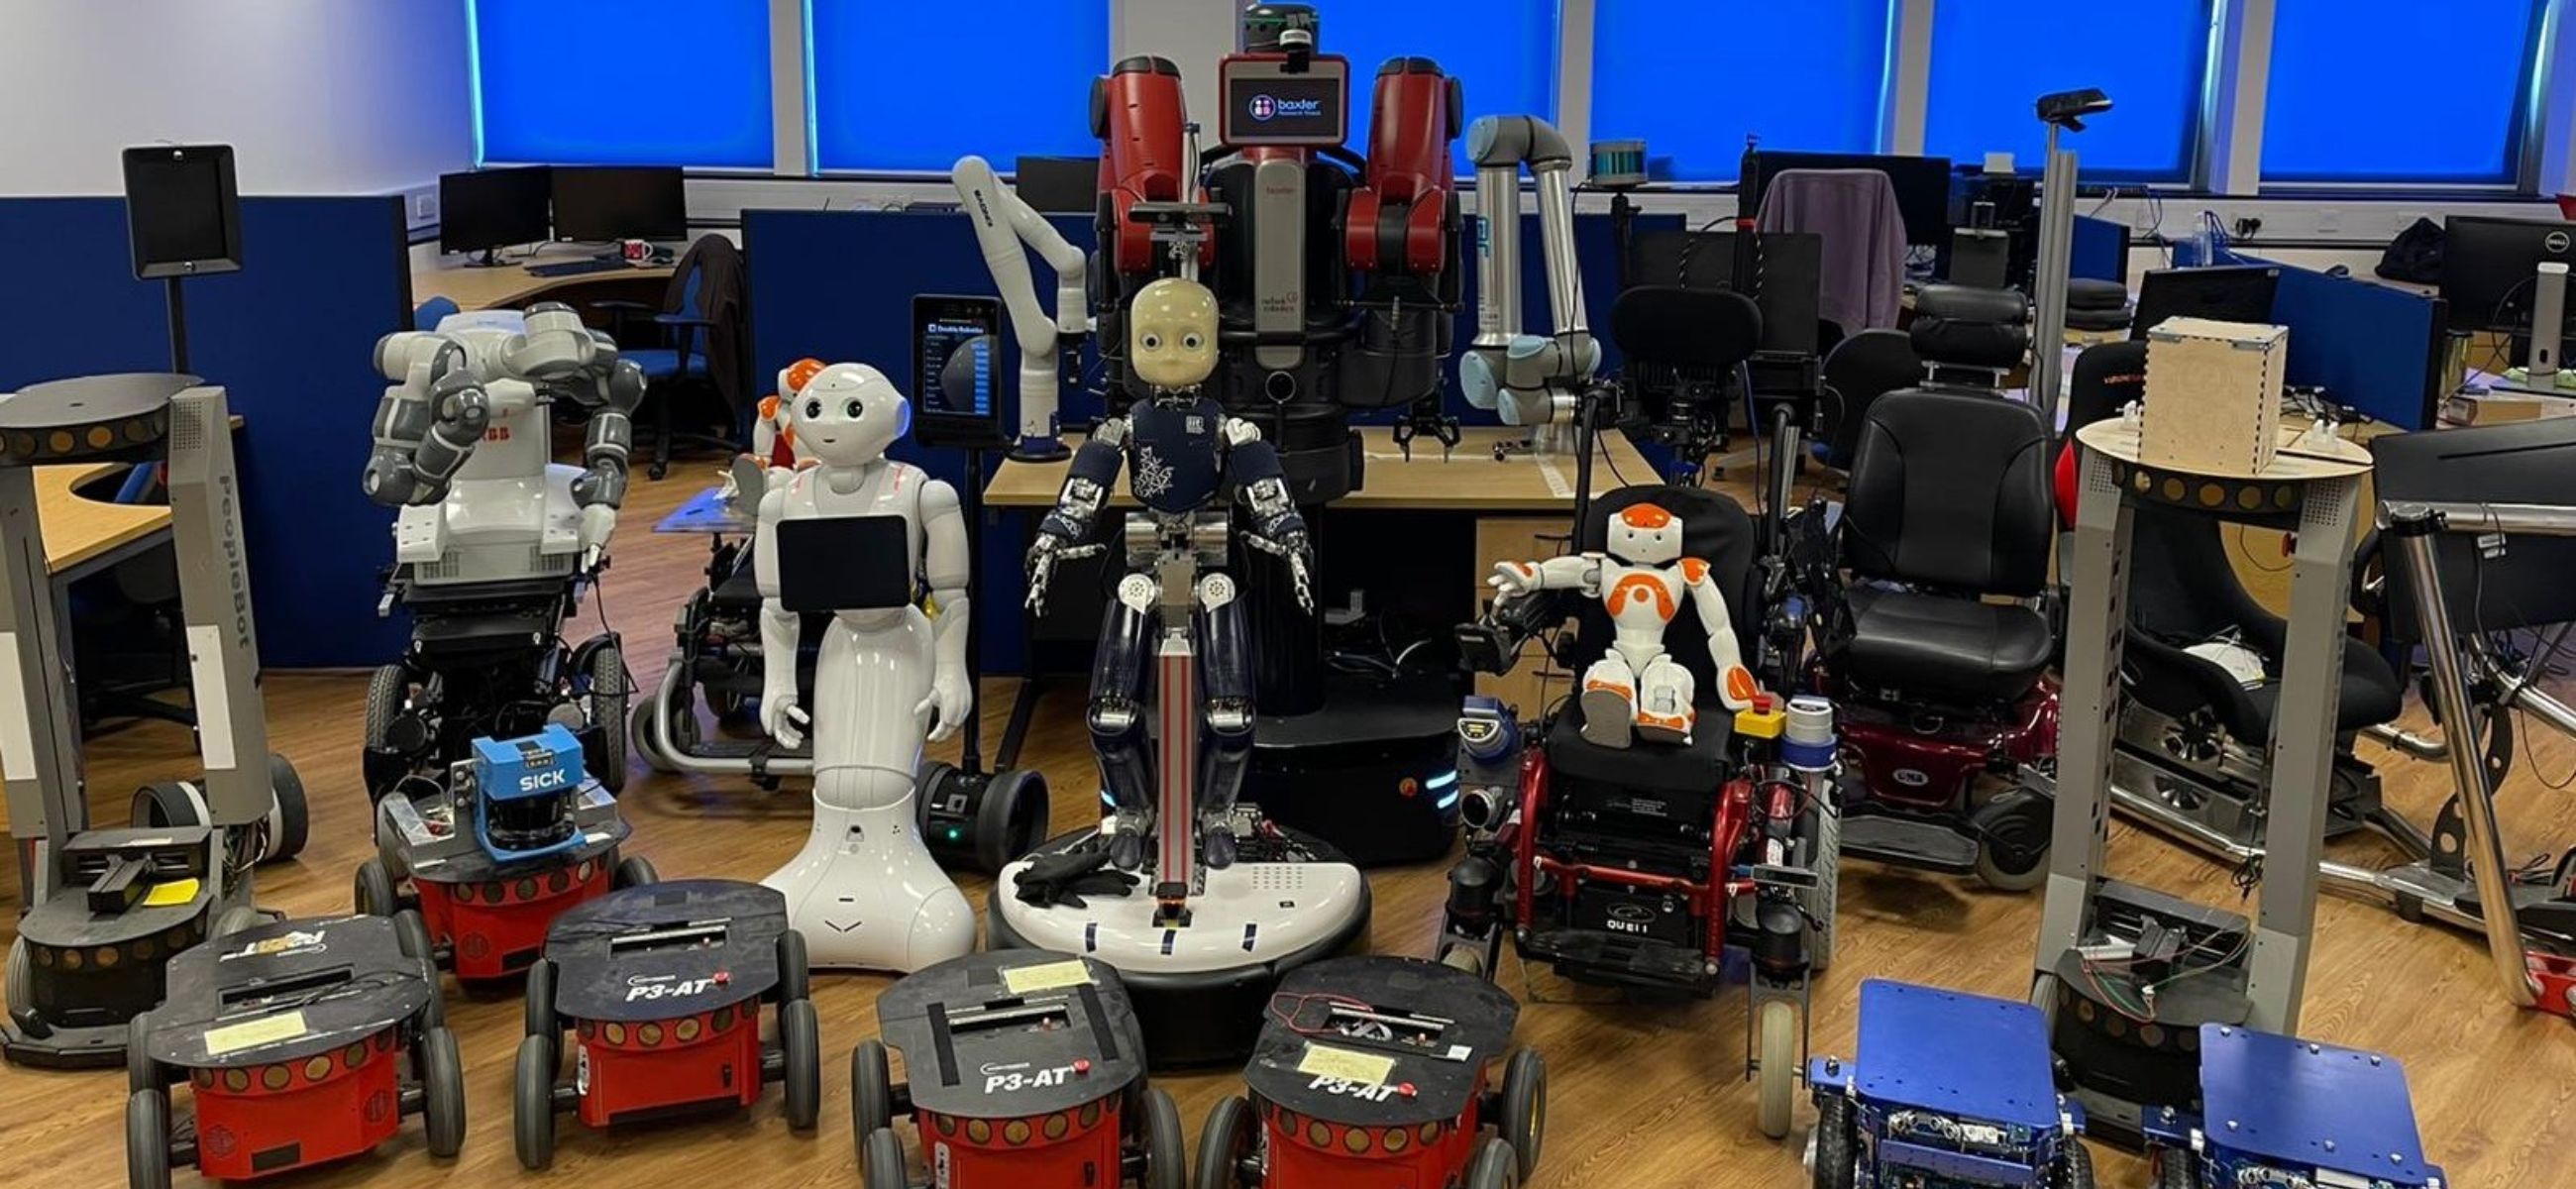 A big group of robots